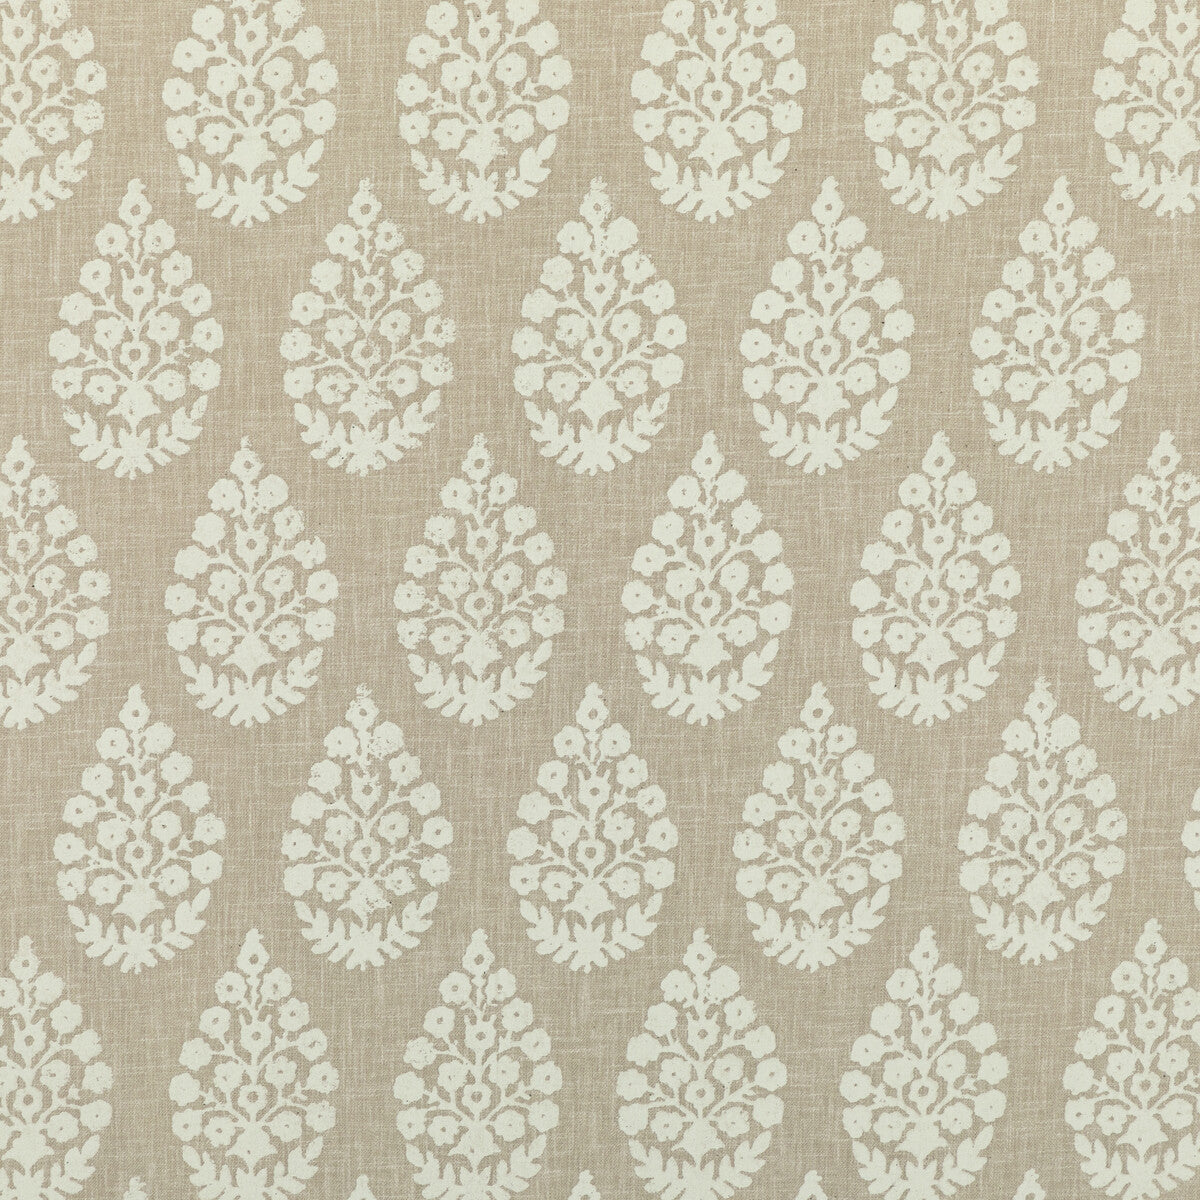 Kravet Basics fabric in tajpaisley-16 color - pattern TAJPAISLEY.16.0 - by Kravet Basics in the L&